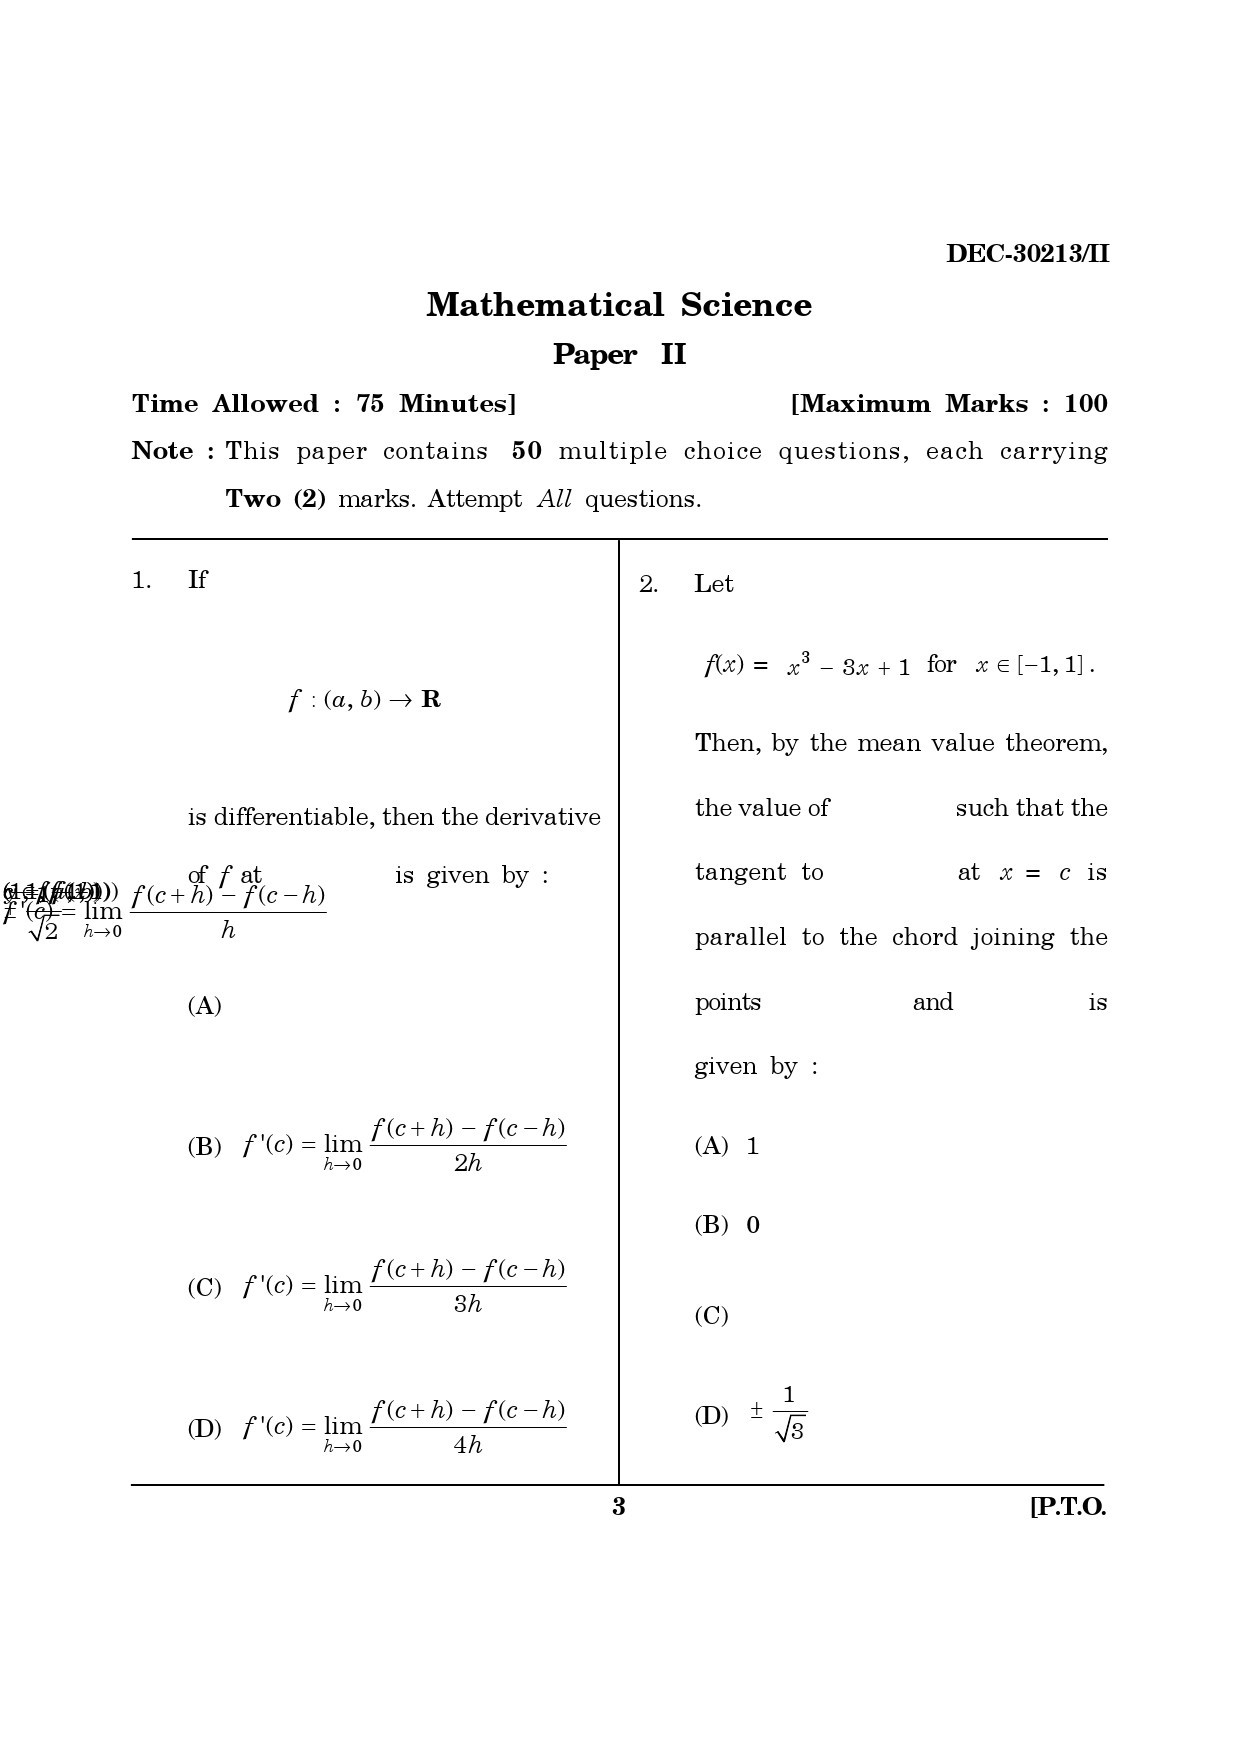 Maharashtra SET Mathematical Sciences Question Paper II December 2013 2